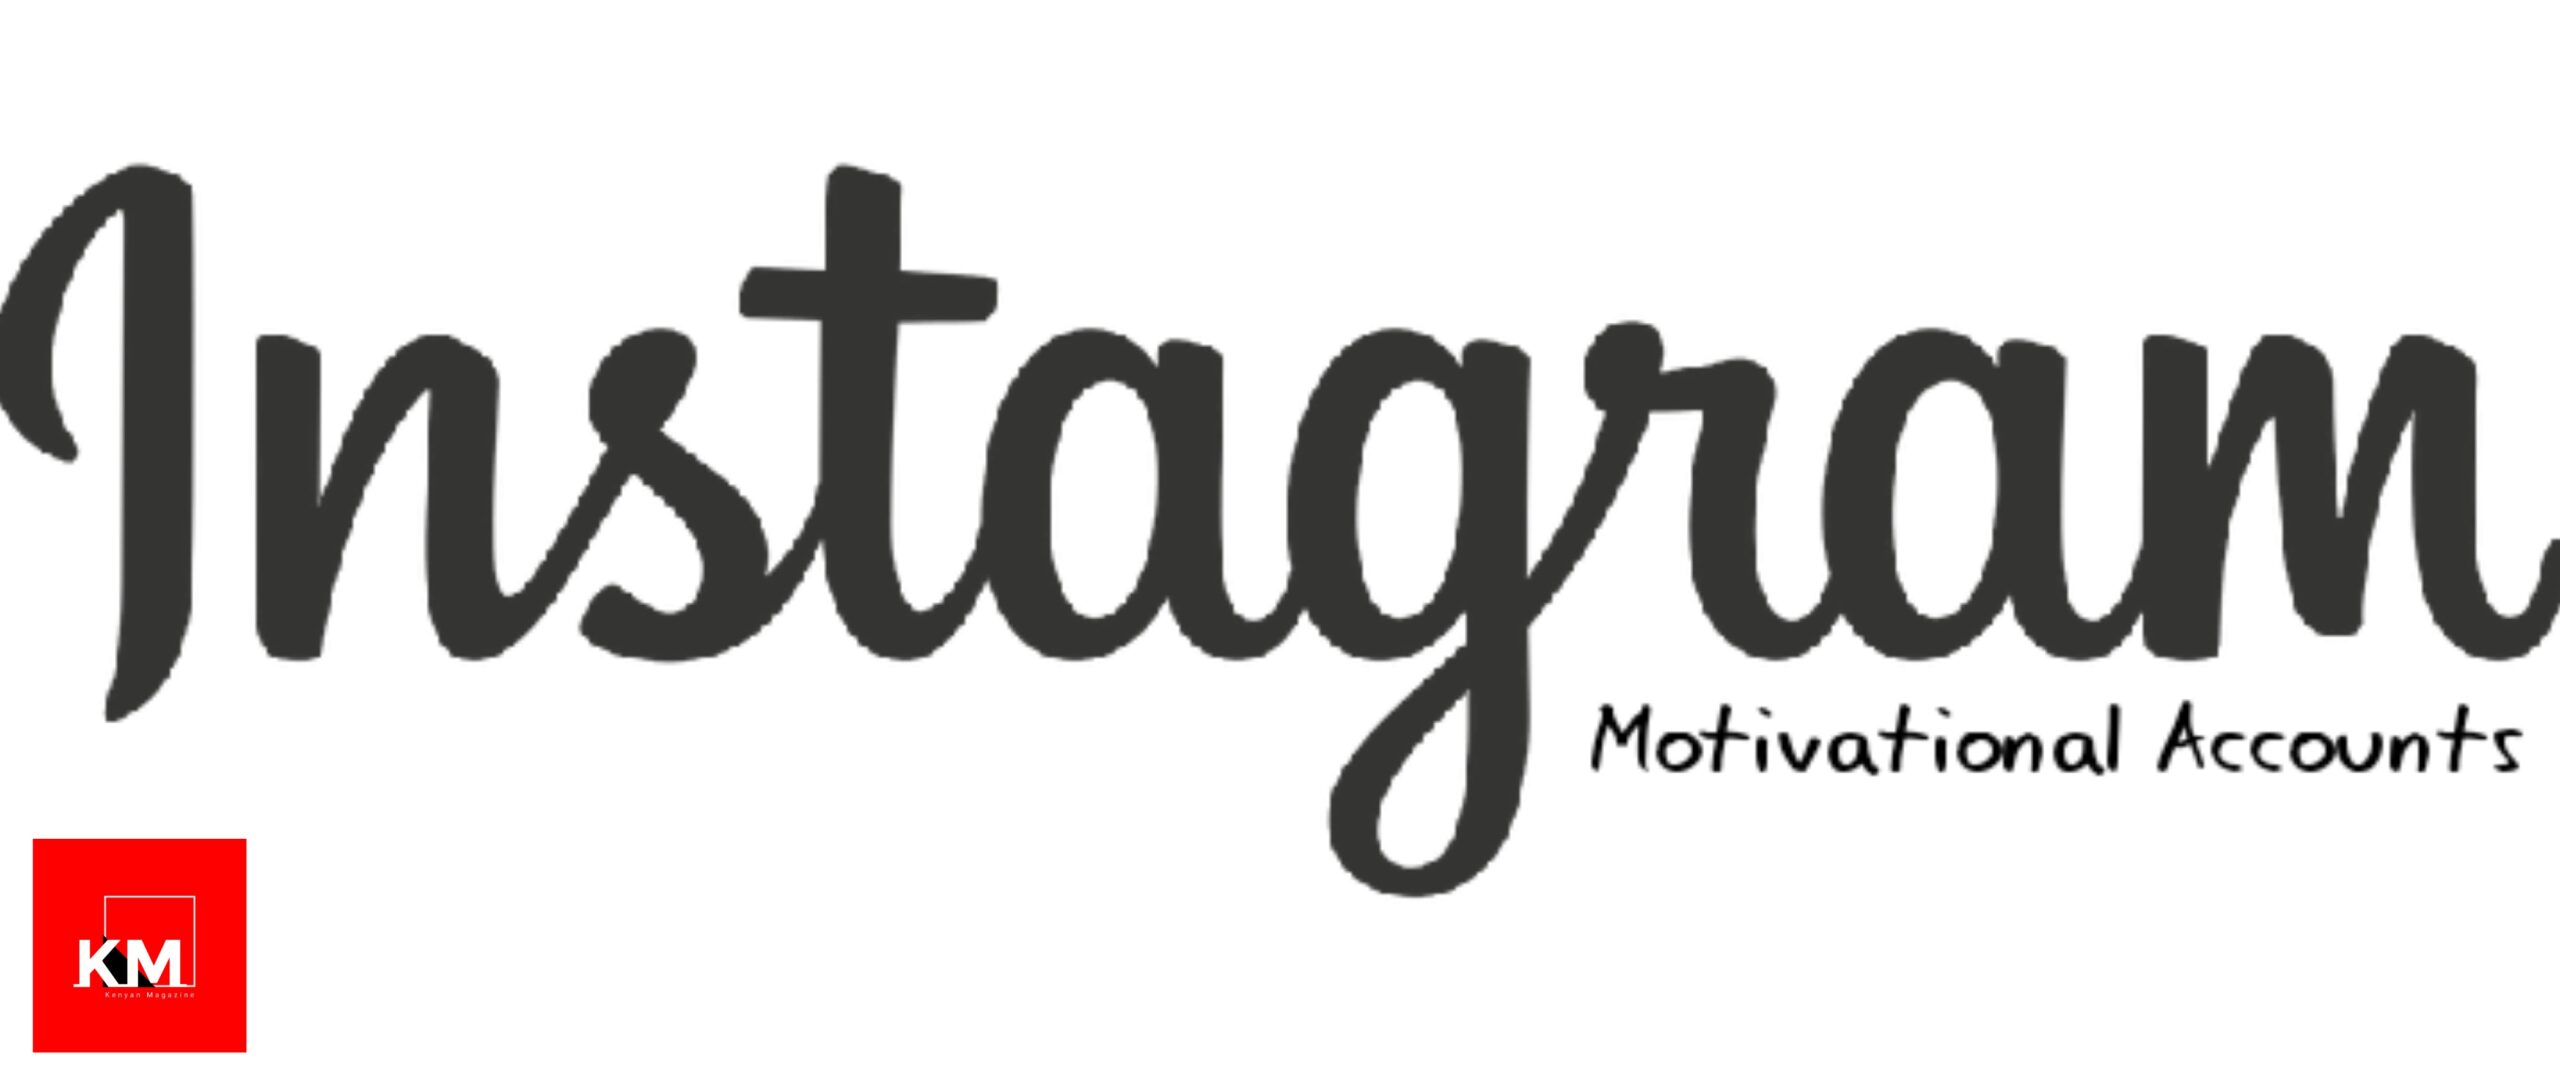 Motivation Instagram accounts (users)